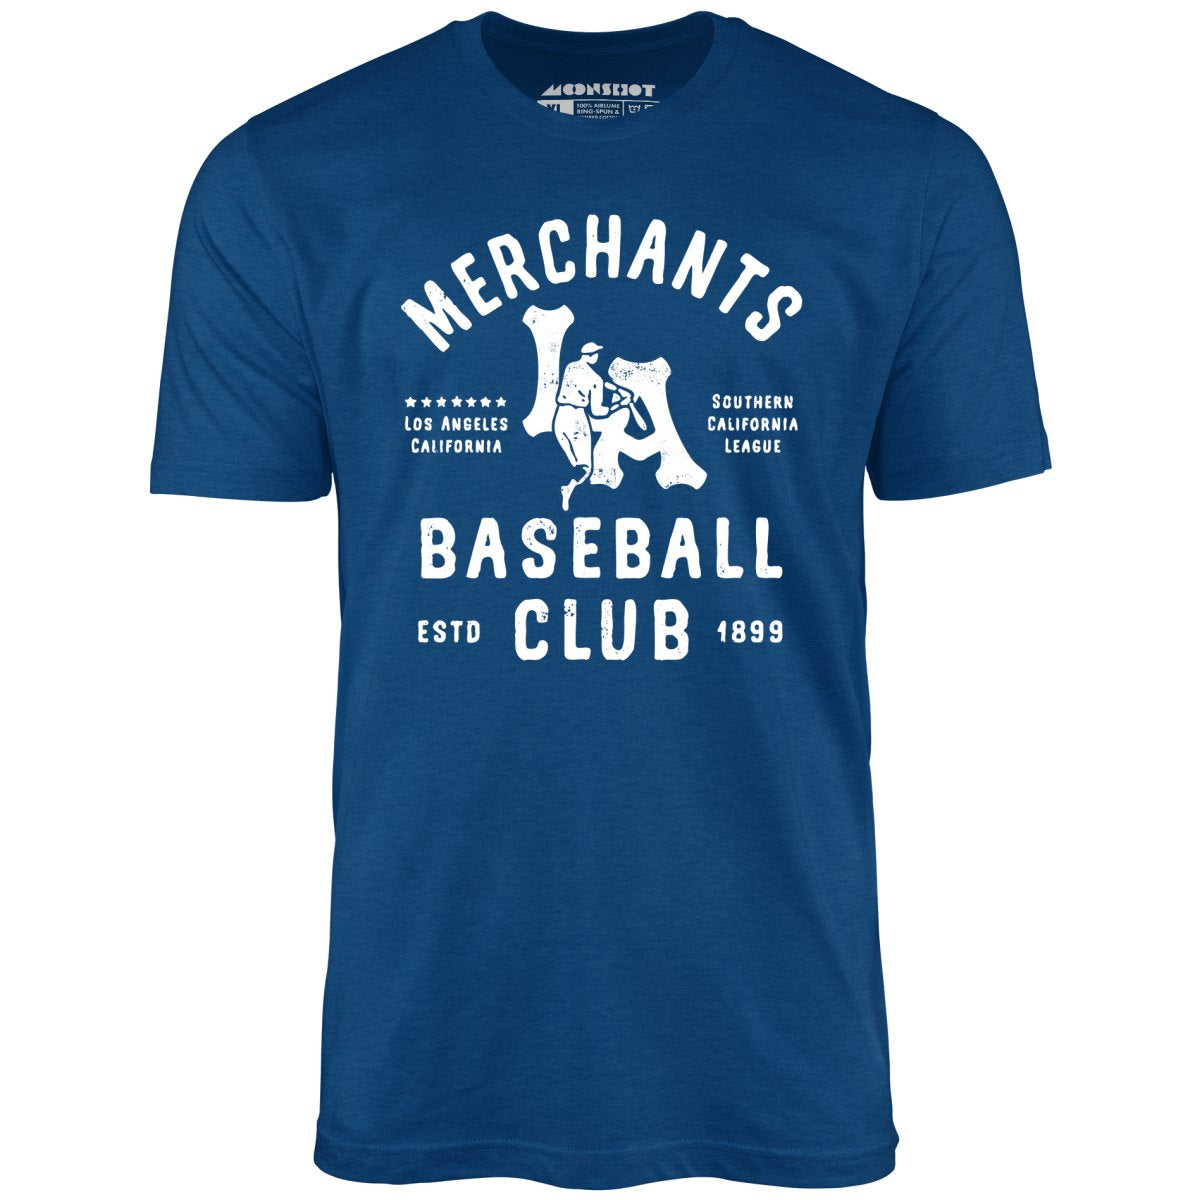 Los Angeles Merchants - California - Vintage Defunct Baseball Teams - Unisex T-Shirt